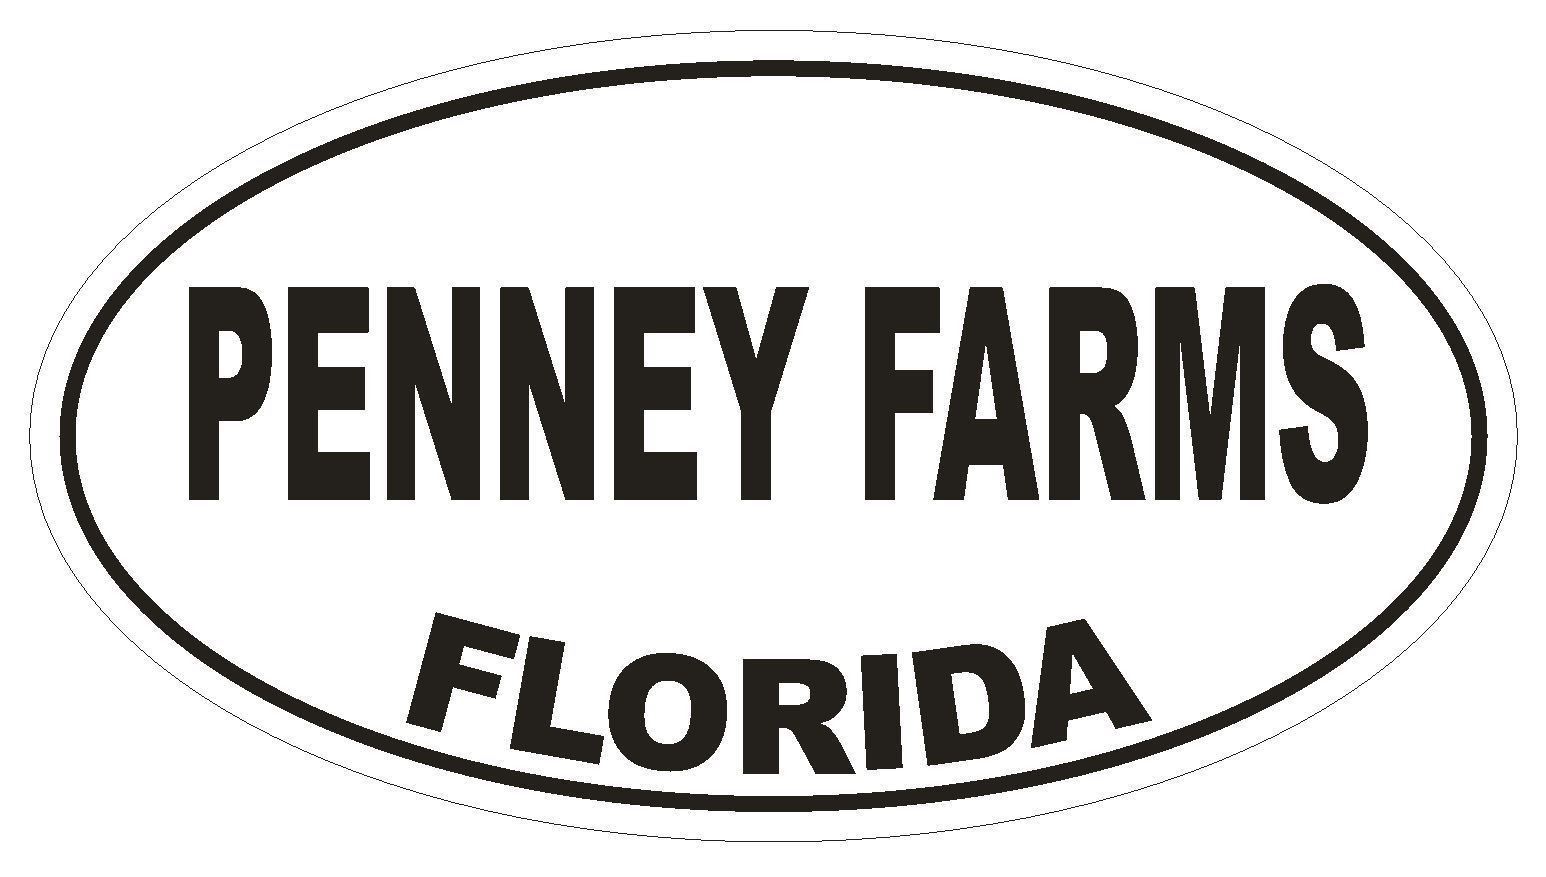 Penney Farms Florida Oval Bumper Sticker or Helmet Sticker D2722 Decal - $1.39 - $75.00